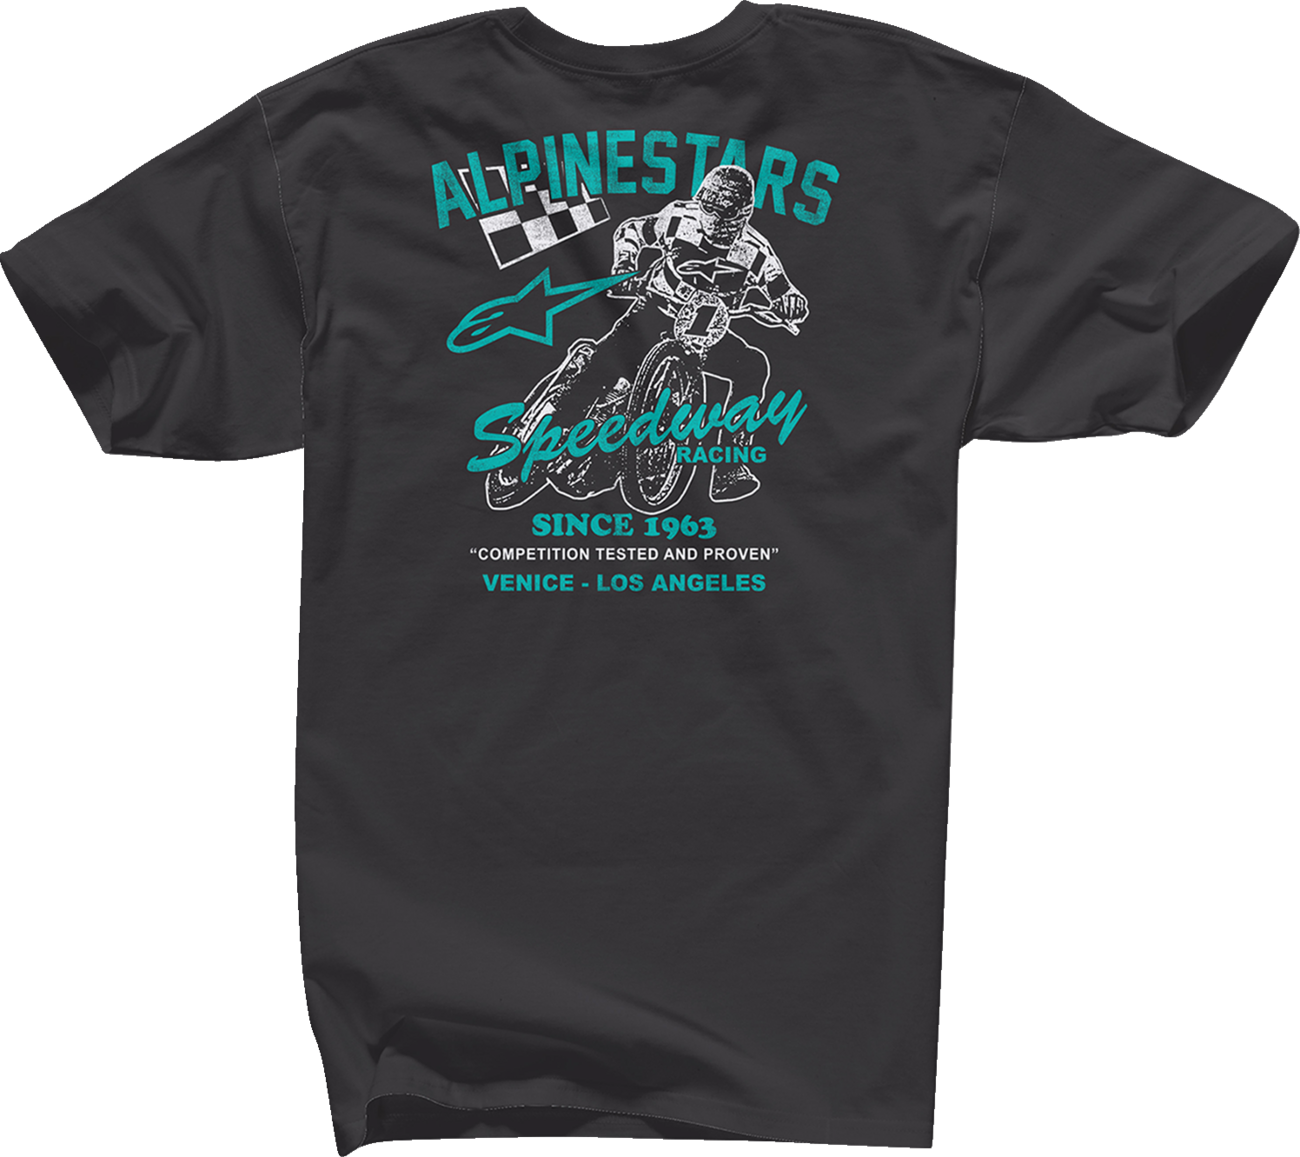 ALPINESTARS Speedway T-Shirt - Black - Large 12137260010L